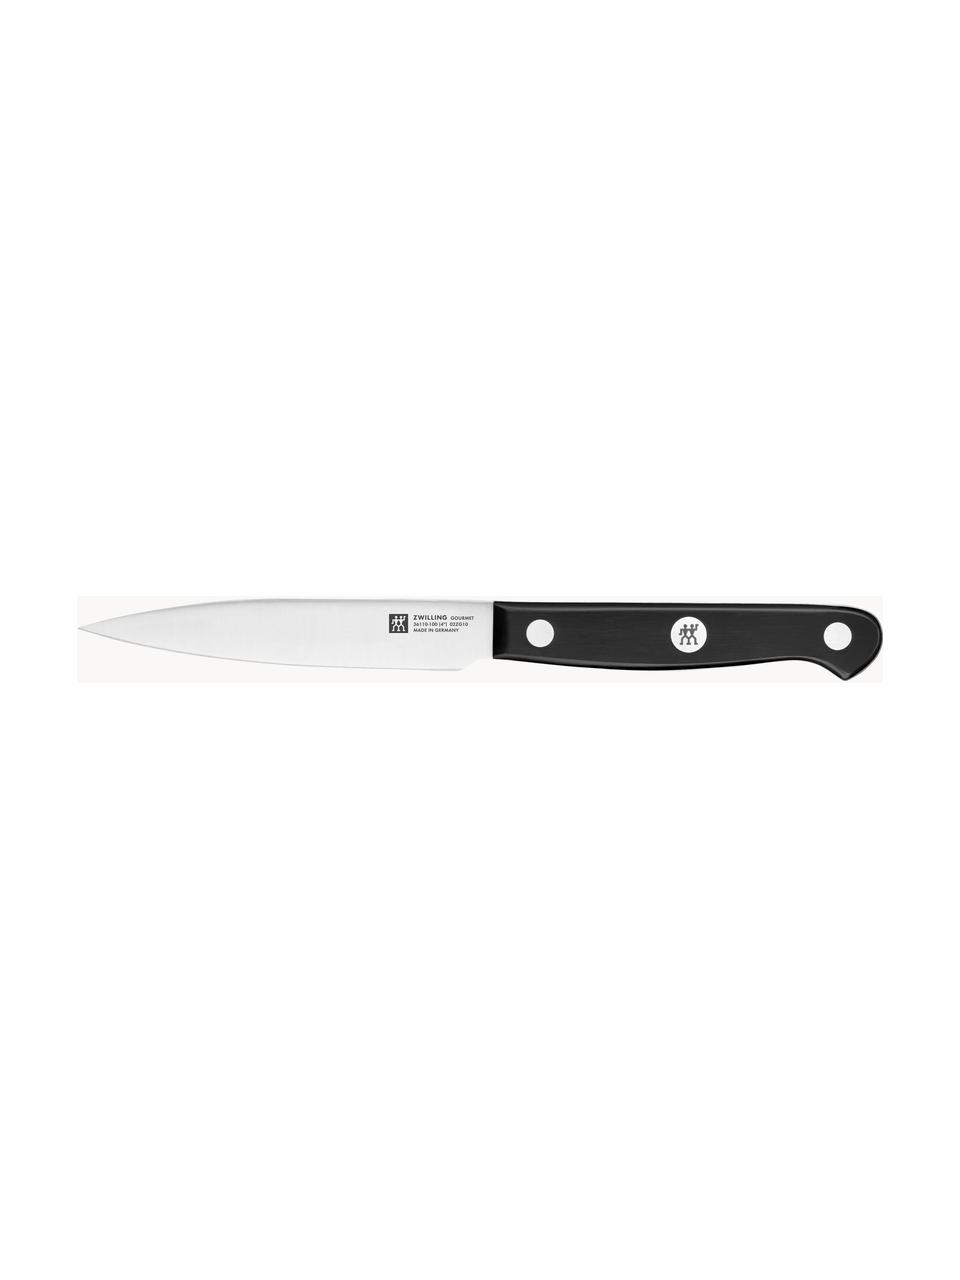 Boque de cuchillos autoafilables Gourmet, 7 pzas., Gris plateado, negro, Set de diferentes tamaños